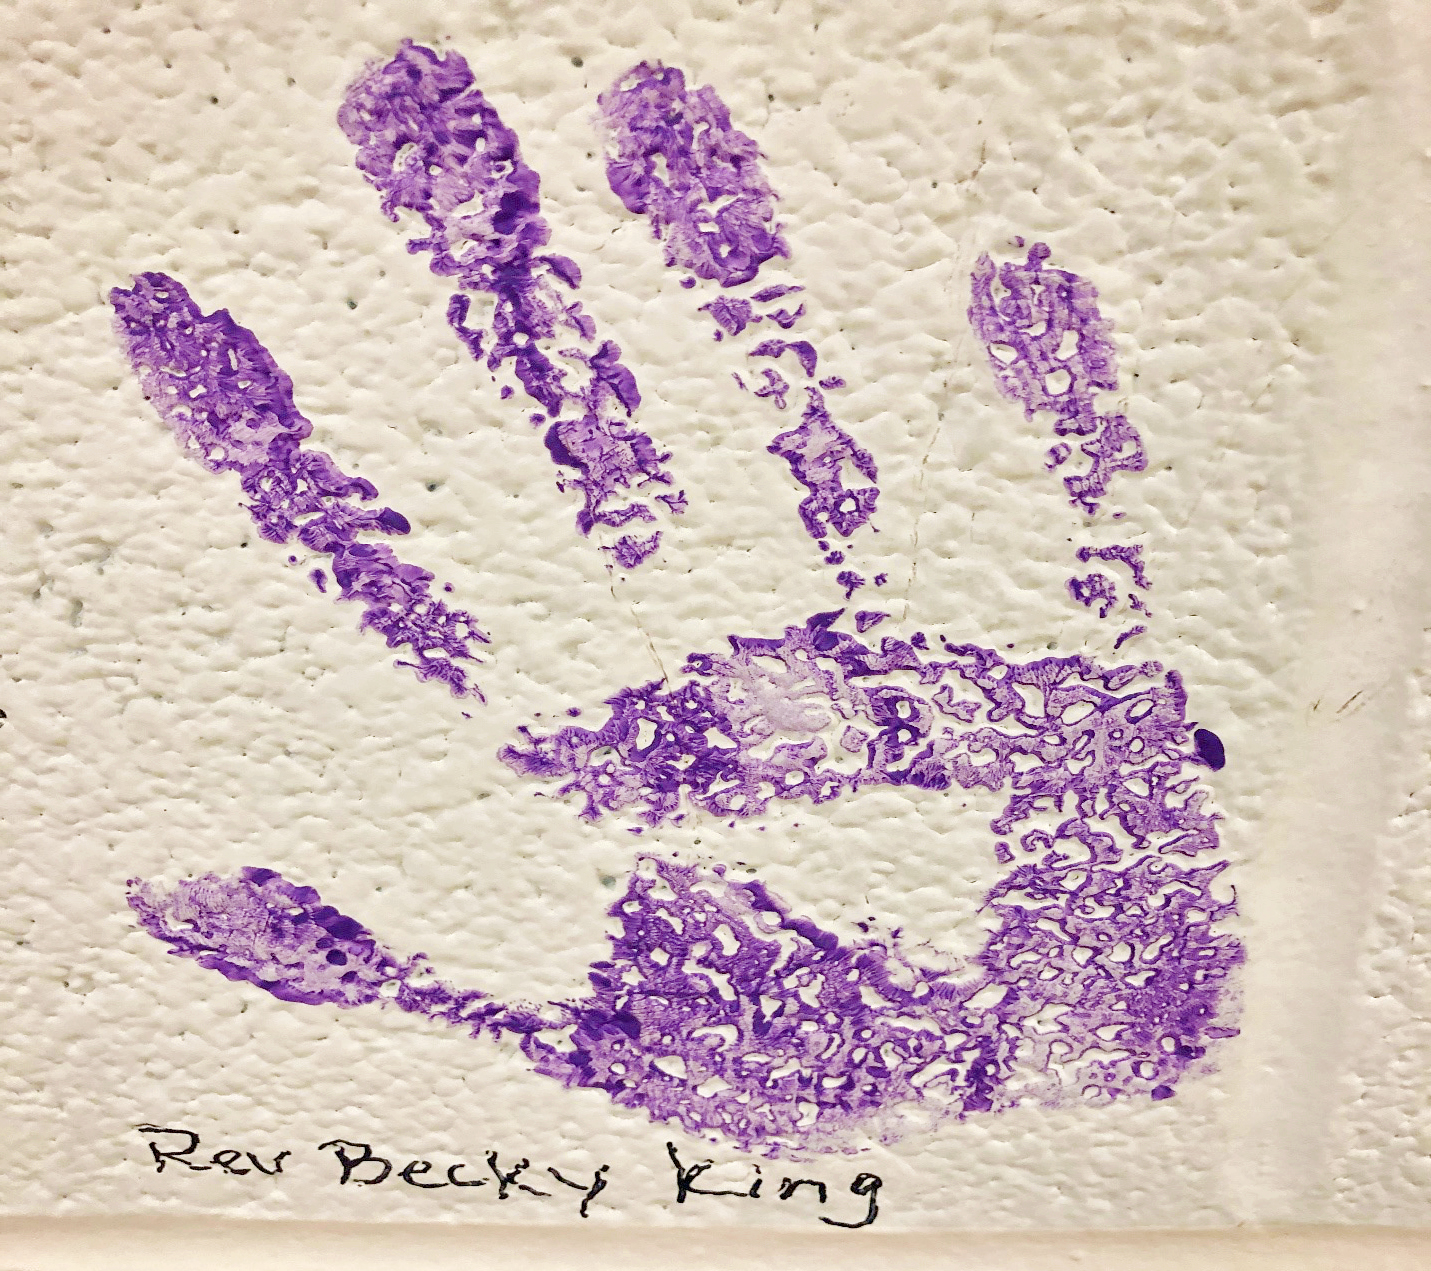 Rev. Becky King's purple handprint